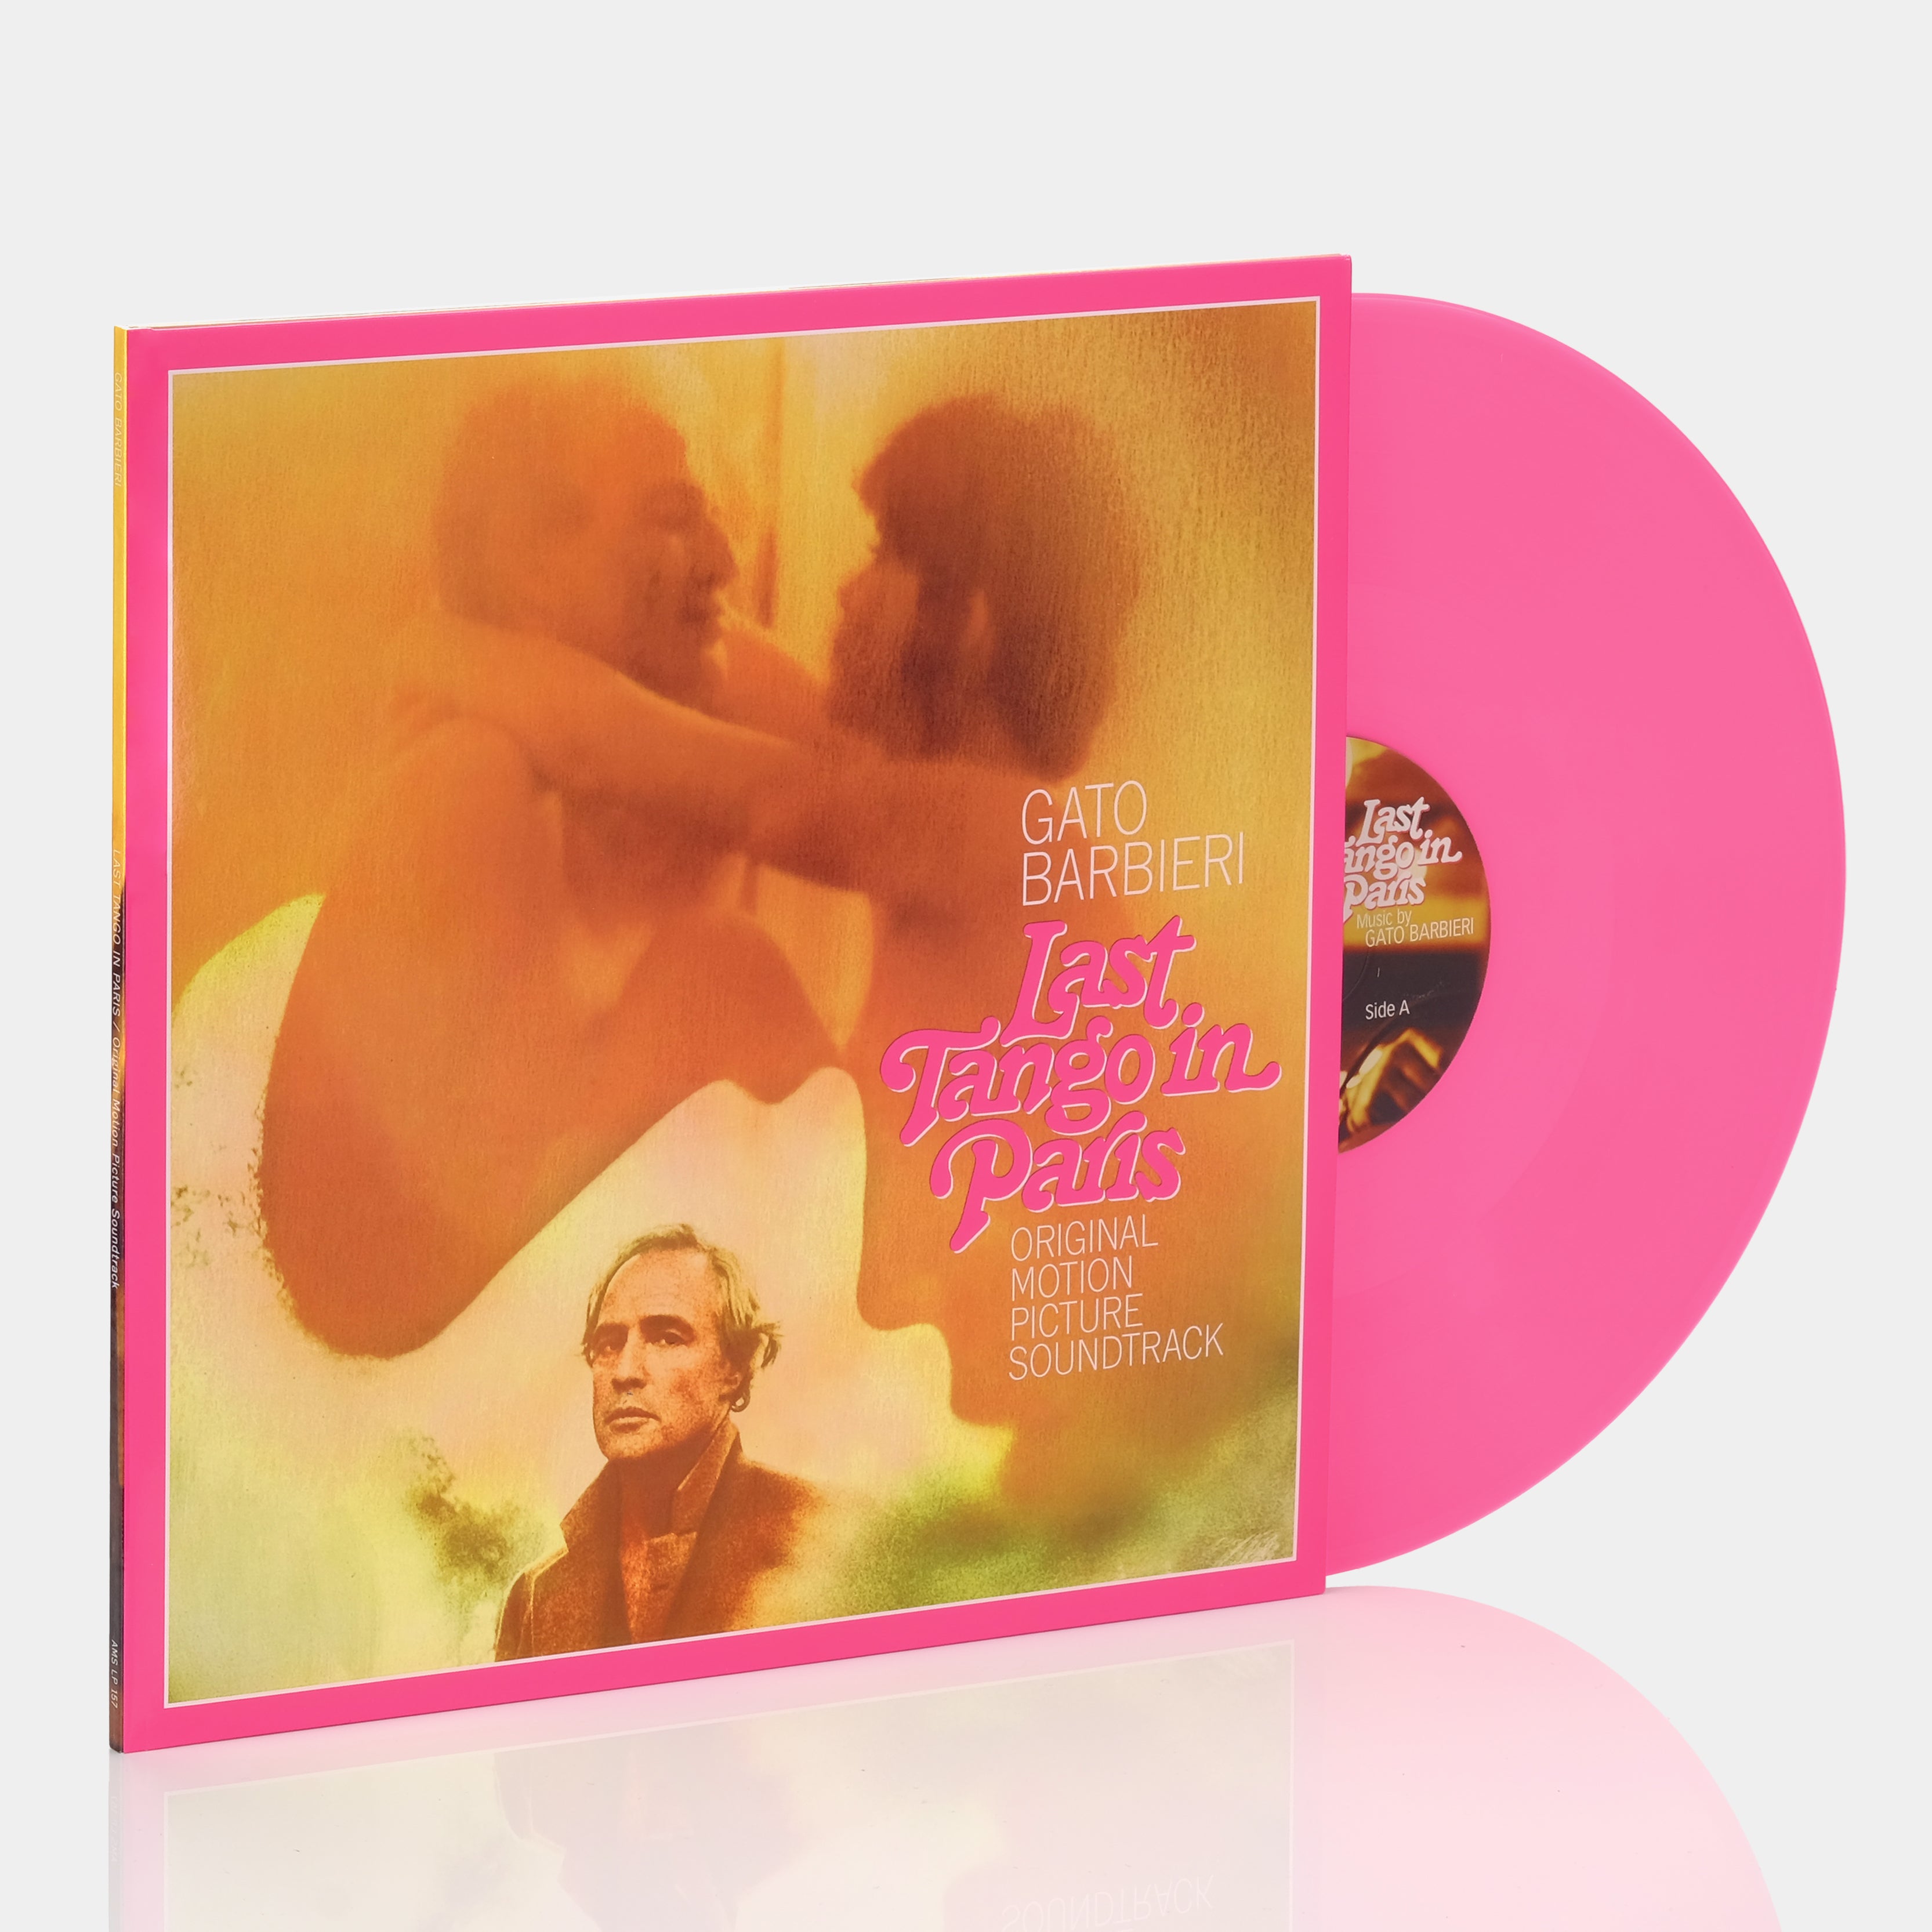 Gato Barbieri - Last Tango In Paris (Original Motion Picture Soundtrack) LP Pink Vinyl Record